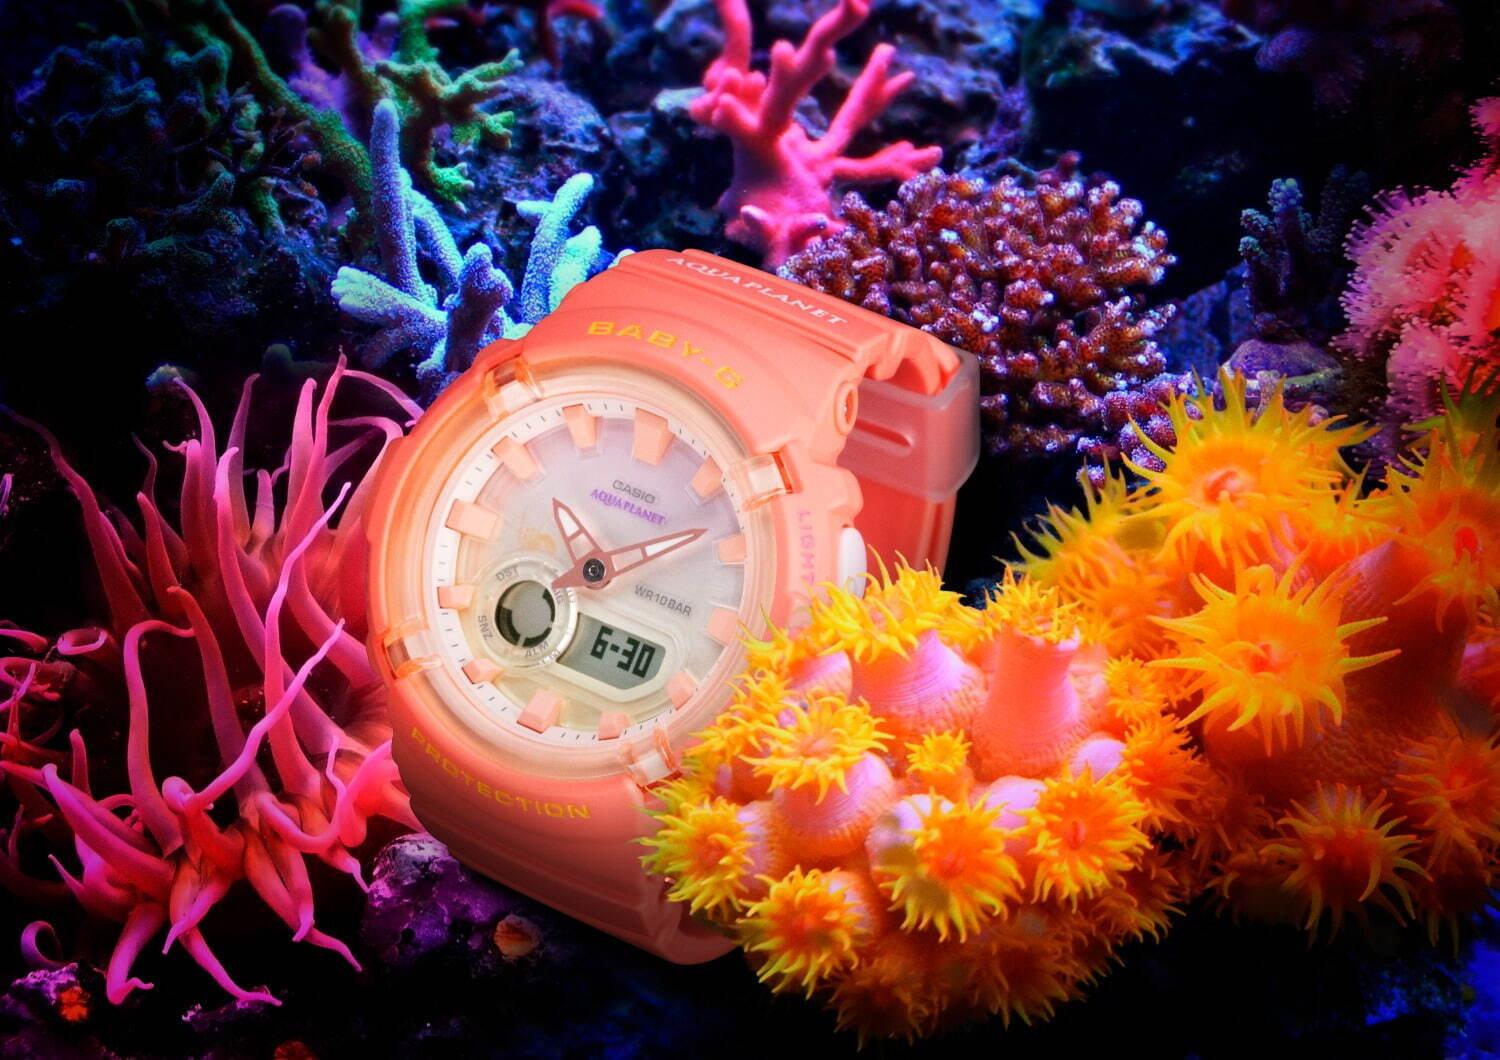 BABY-G“サンゴ”モチーフの新作腕時計、コーラルオレンジのケース＆グラデーション文字板 コピー